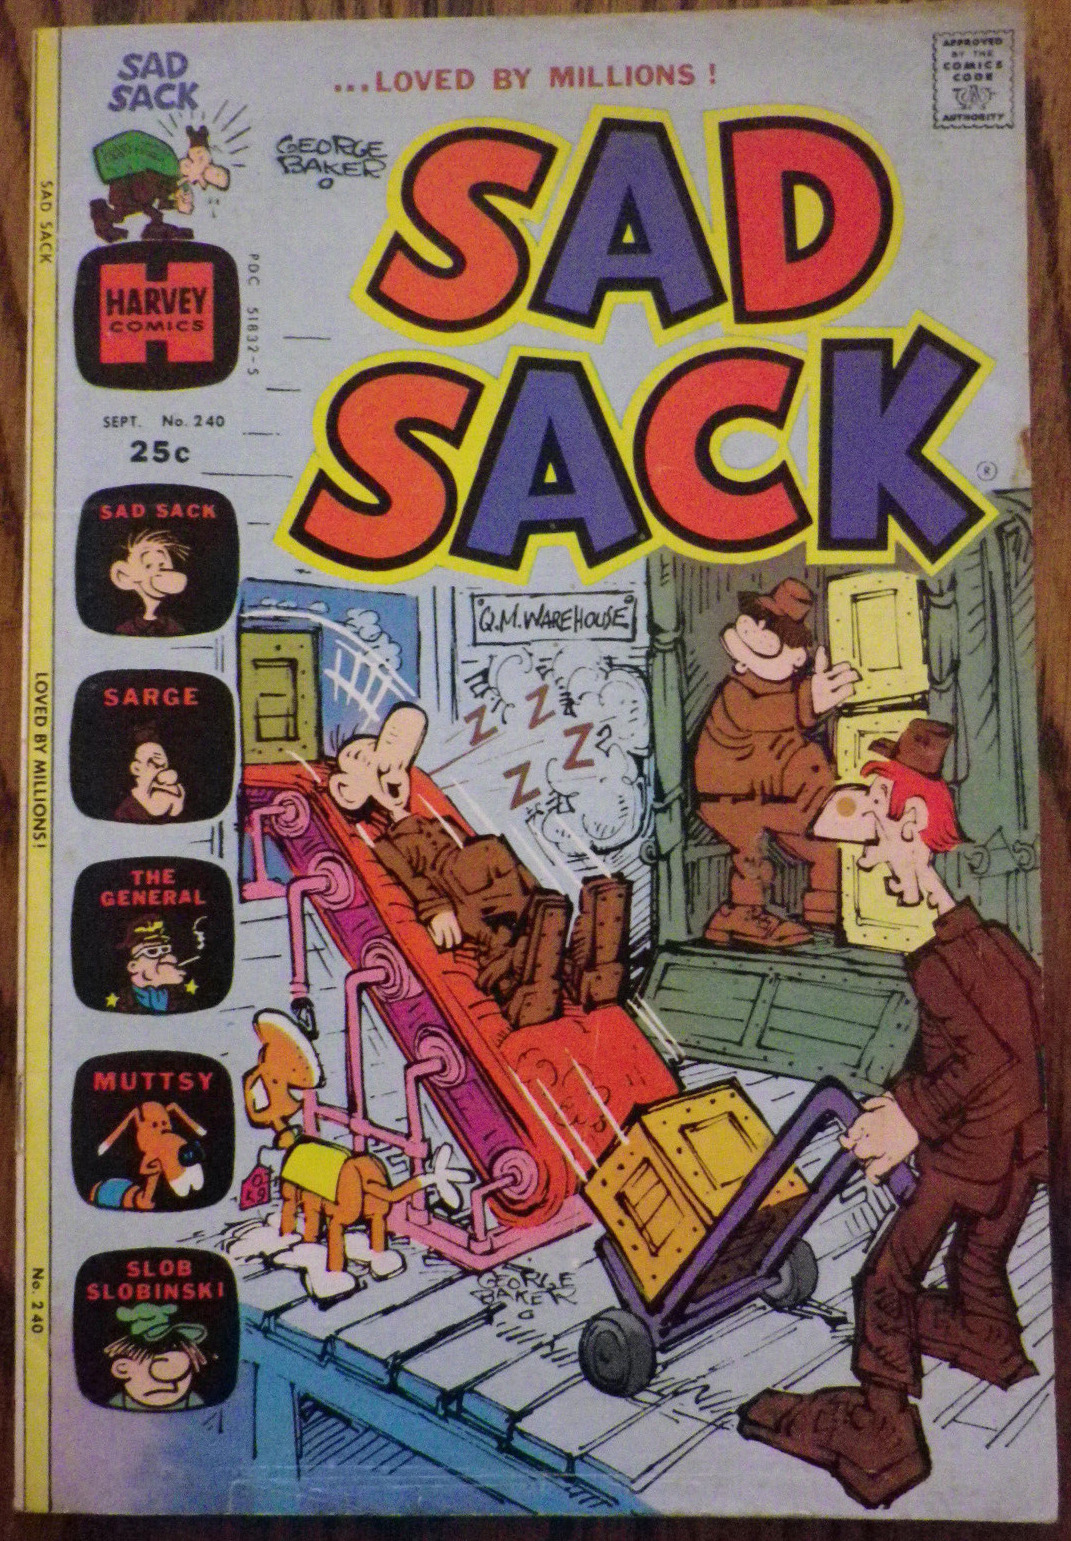 Sad Sack #240 - Sept 1974 - Harvey Comics - VERY NICE - Look